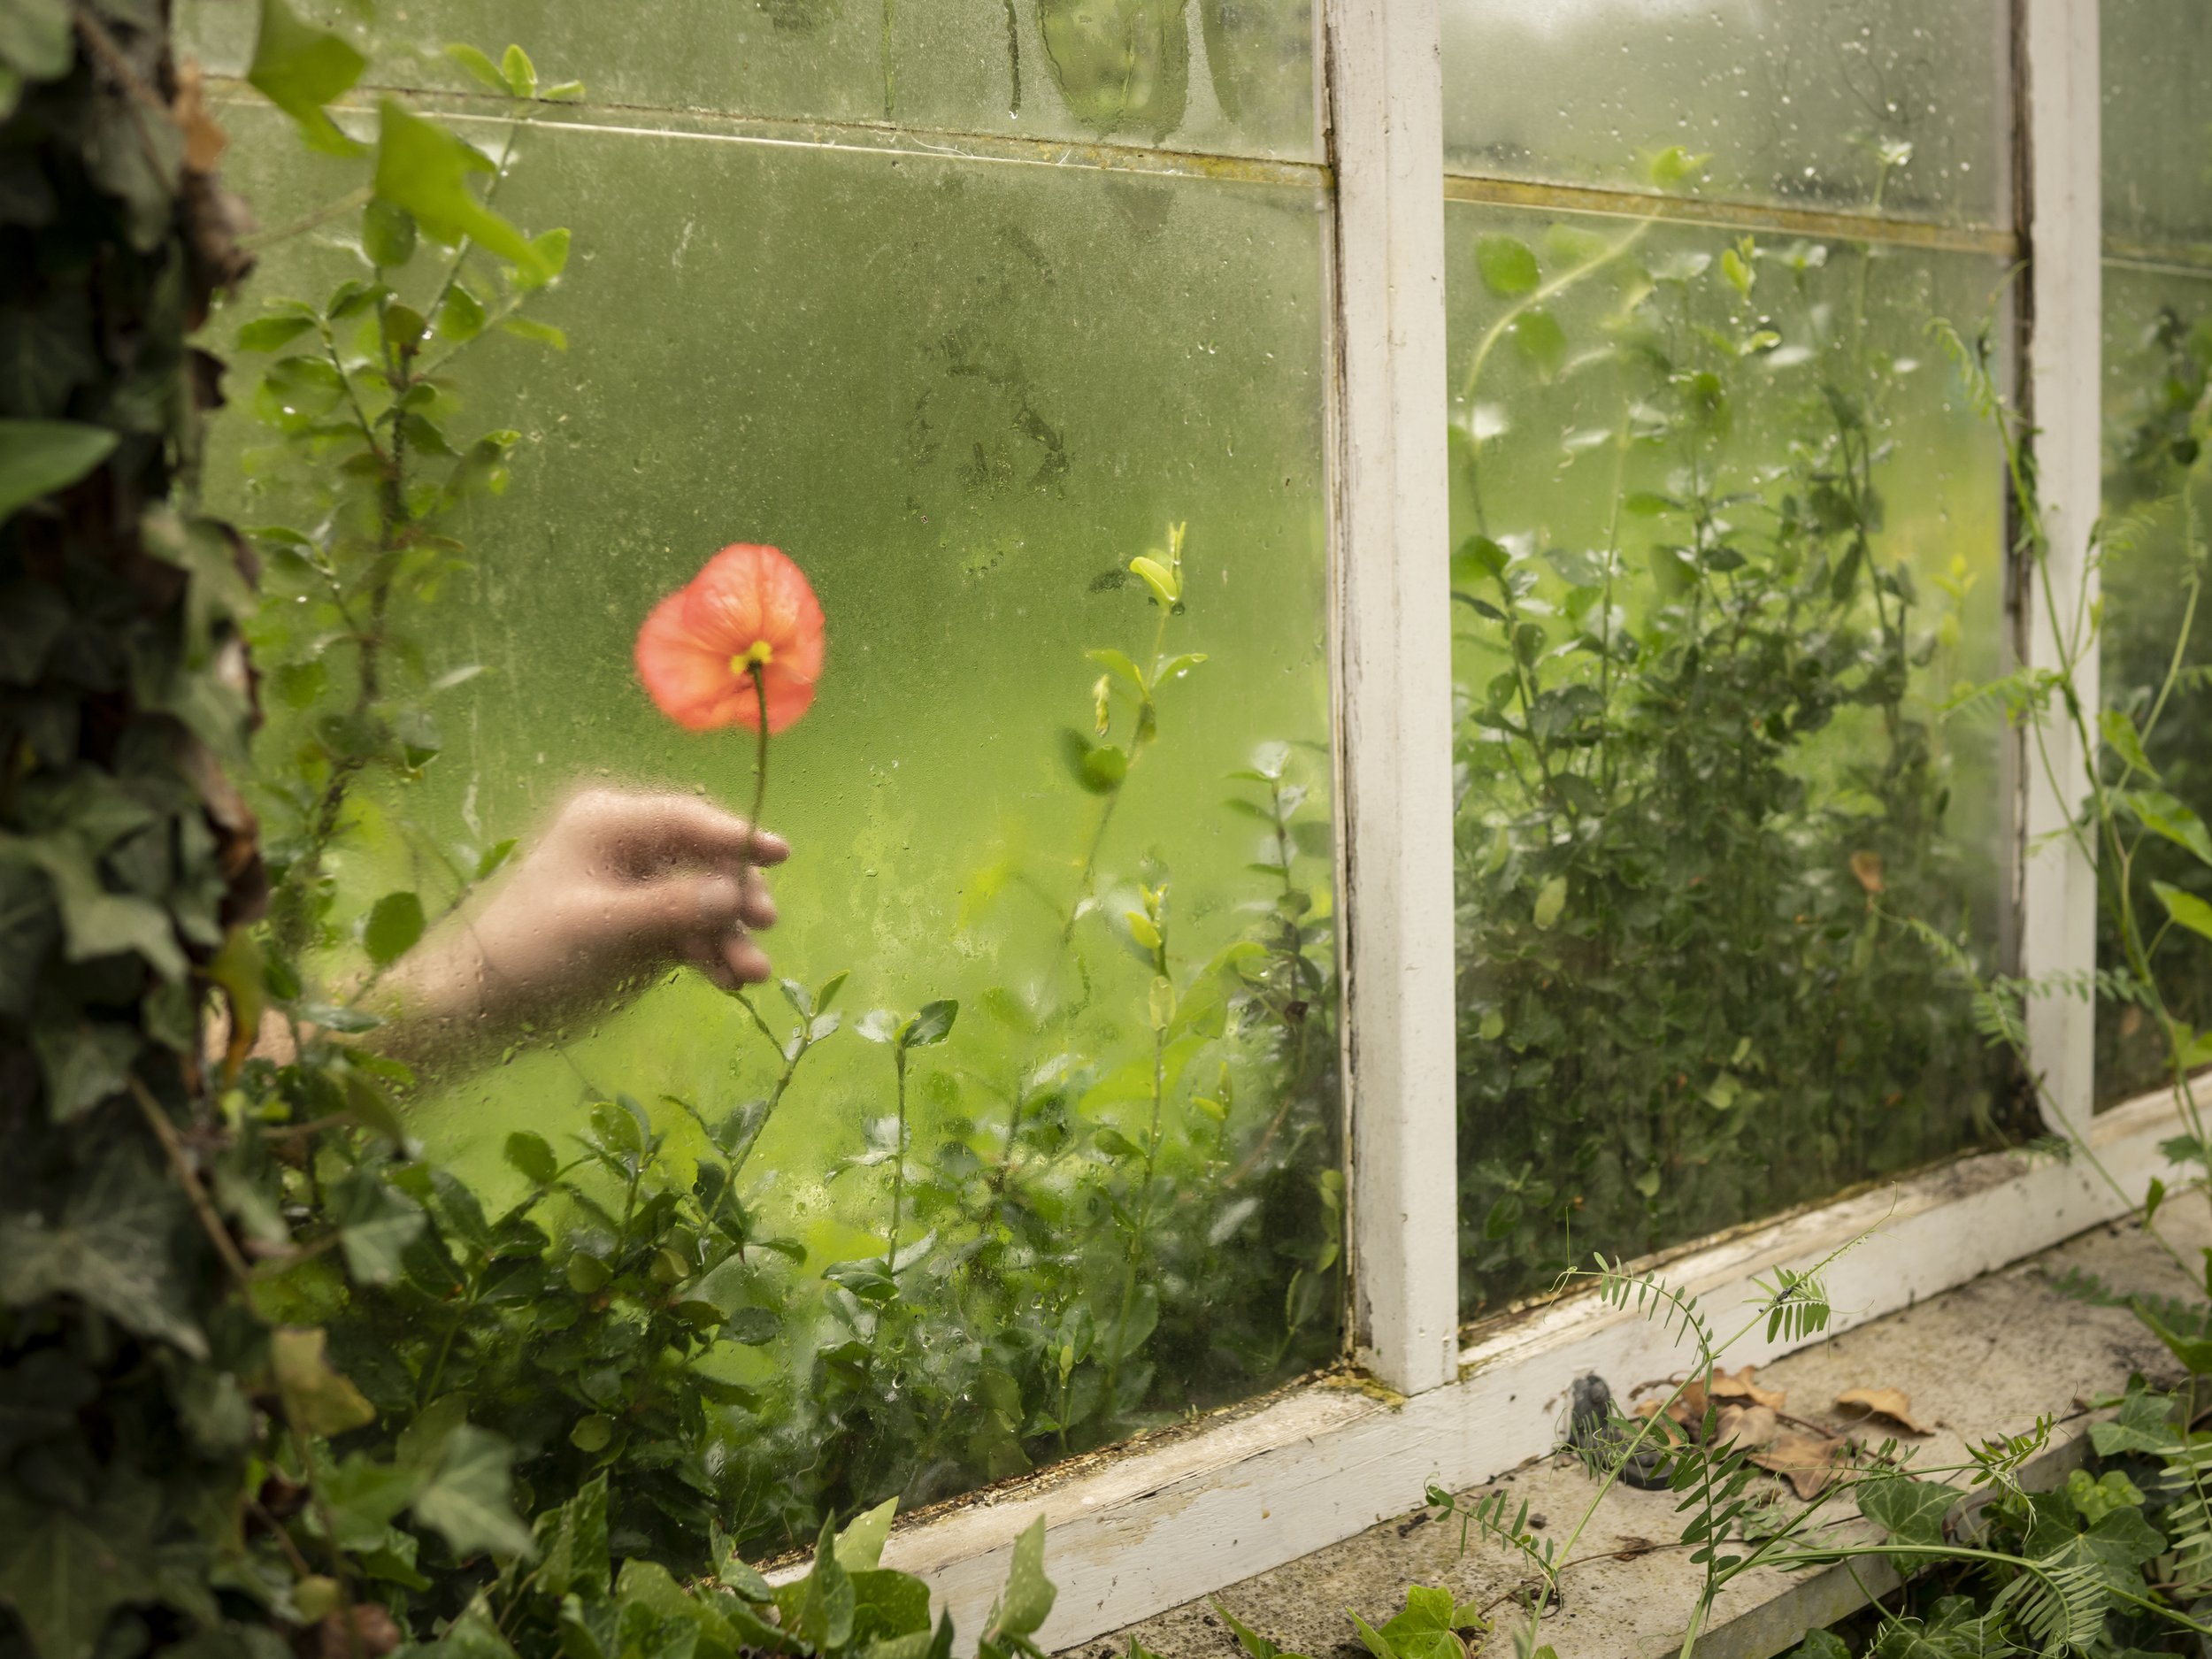 Cig Harvey The Poppy and the Greenhouse, Camden, Maine, 2019